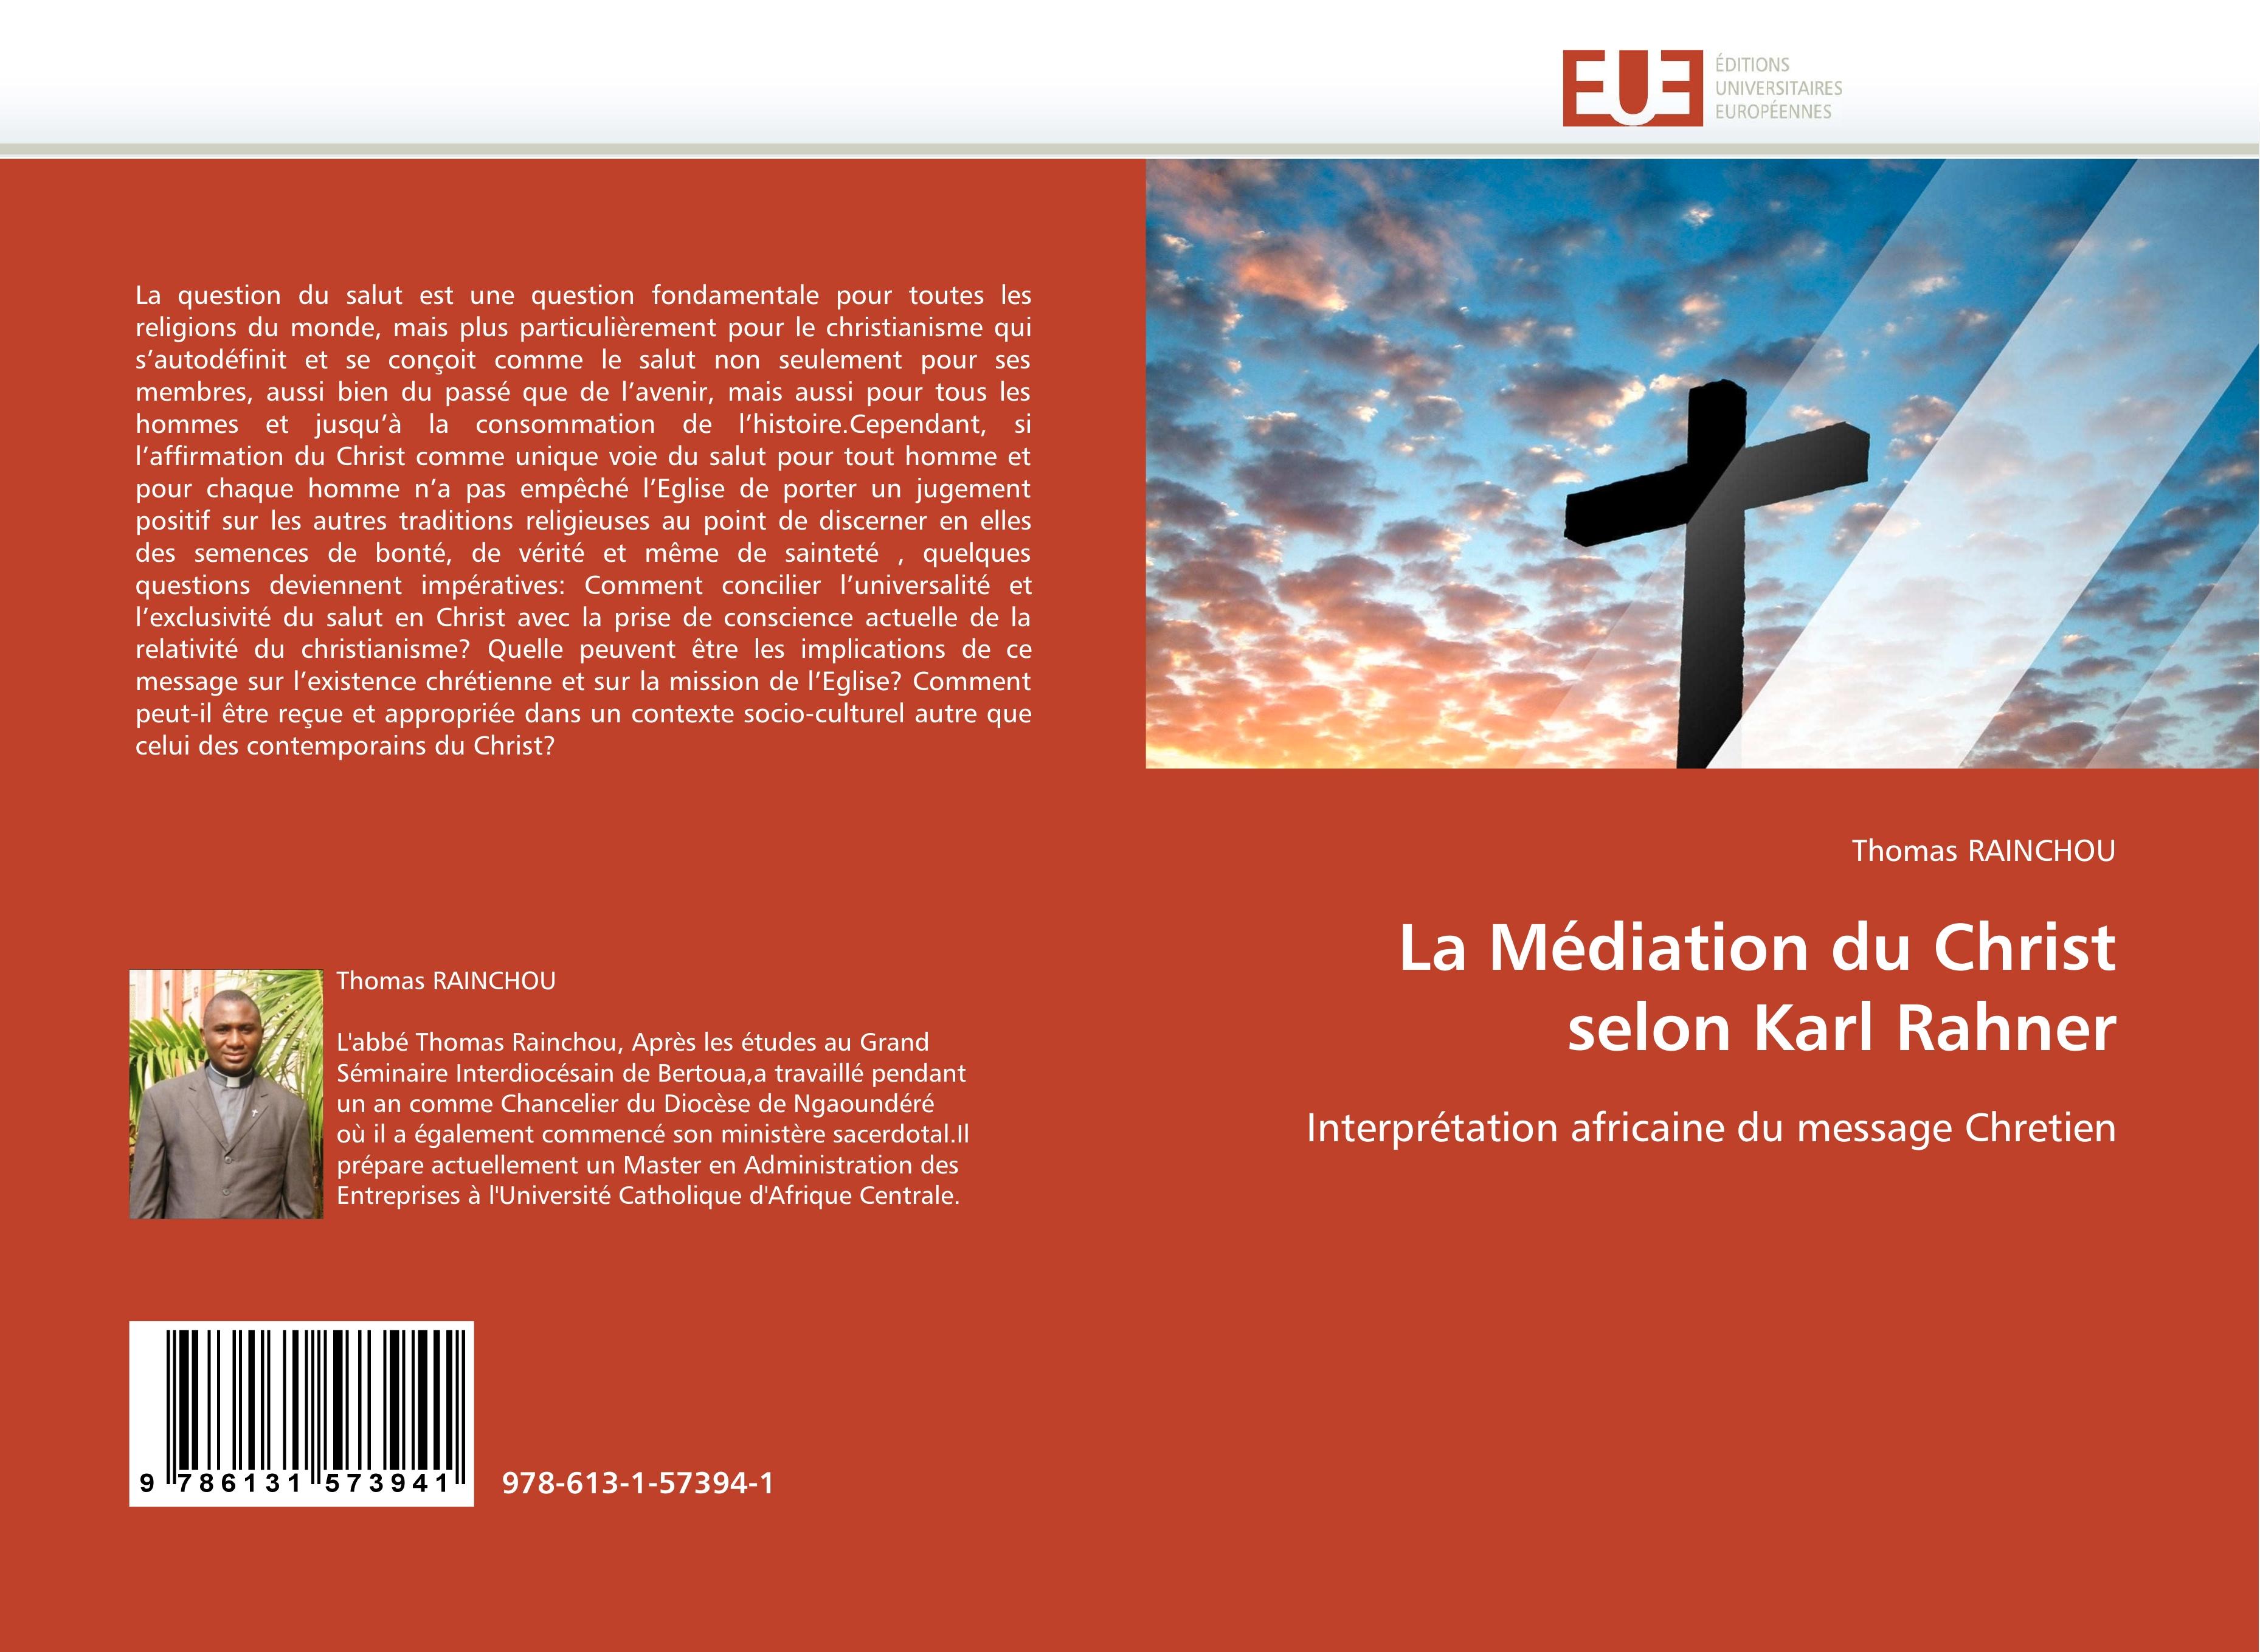 La Médiation du Christ selon Karl Rahner: Interprétation africaine du message Chretien (Omn.Univ.Europ.)